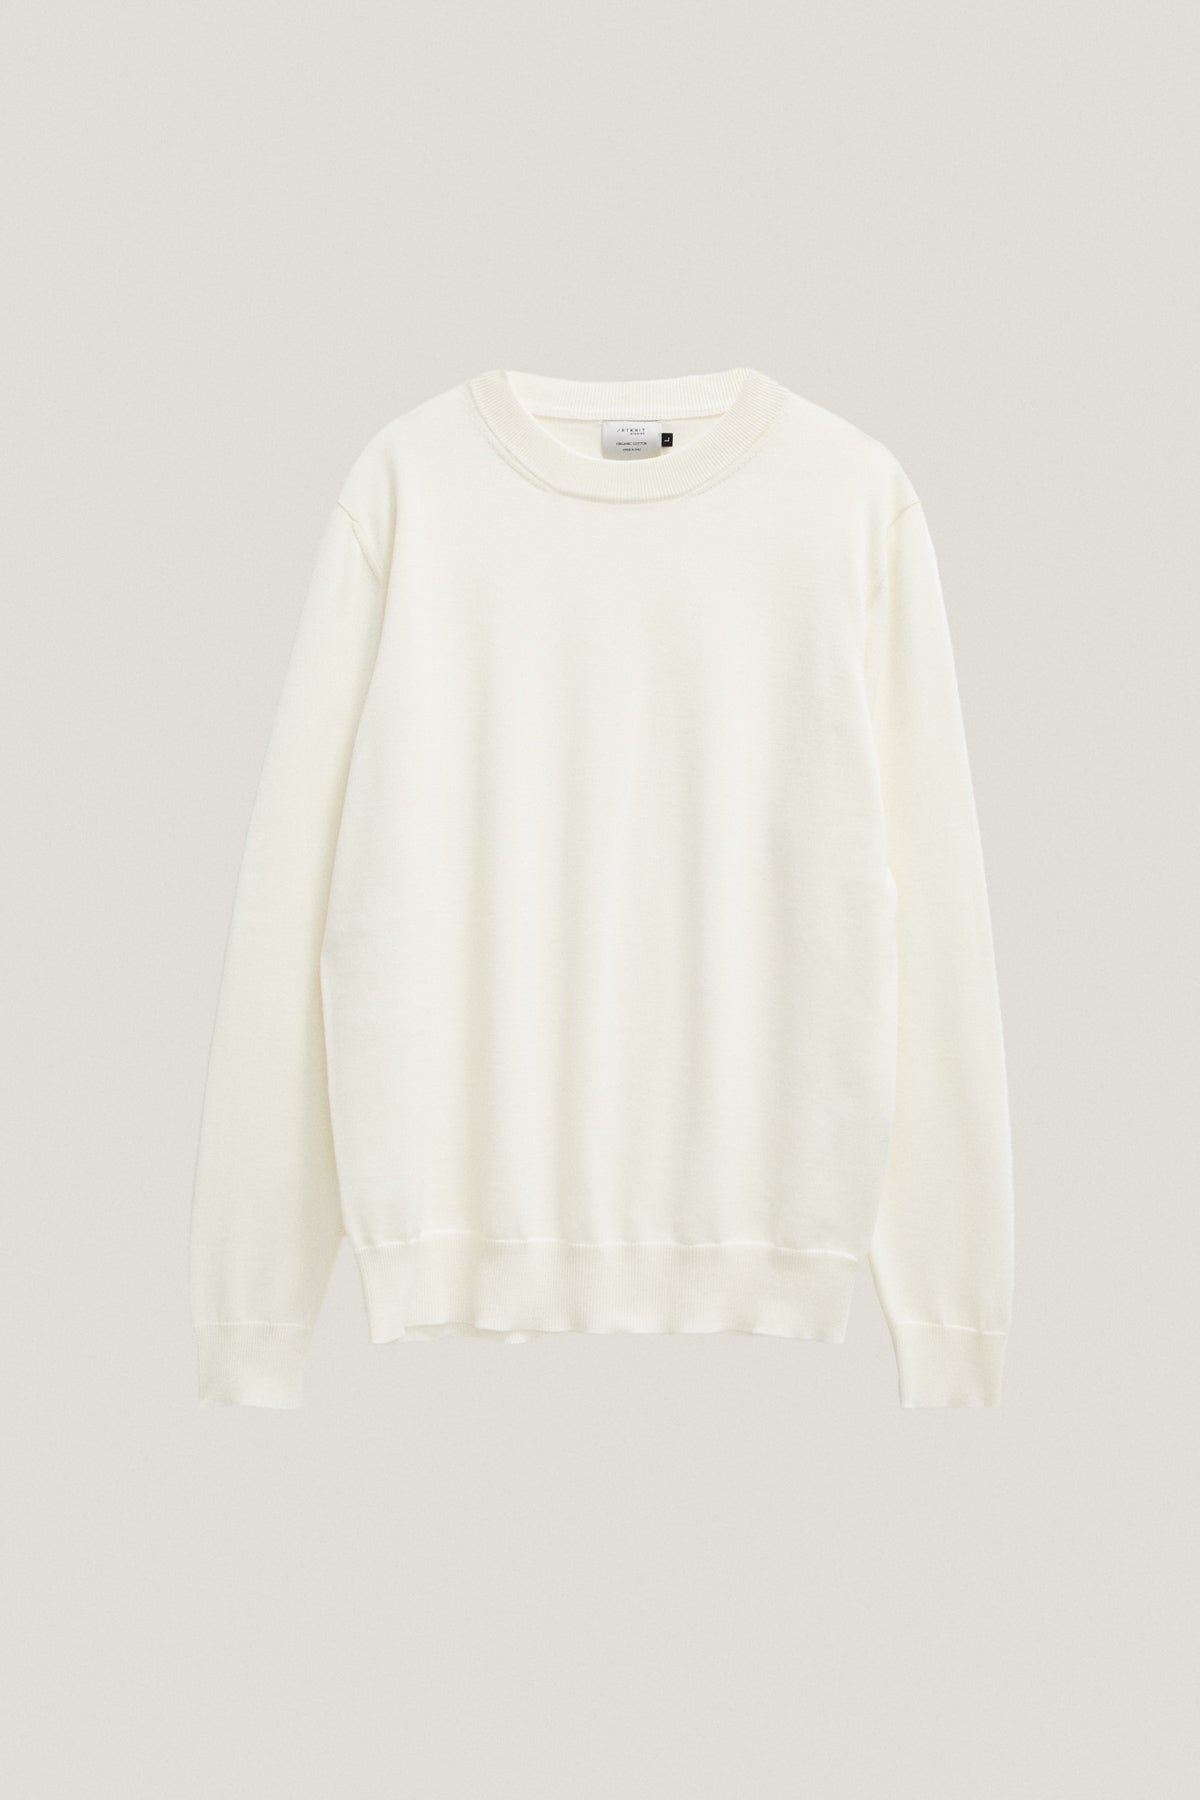 Milk White | The Organic Cotton Lightweight Sweater – Imperfect Version